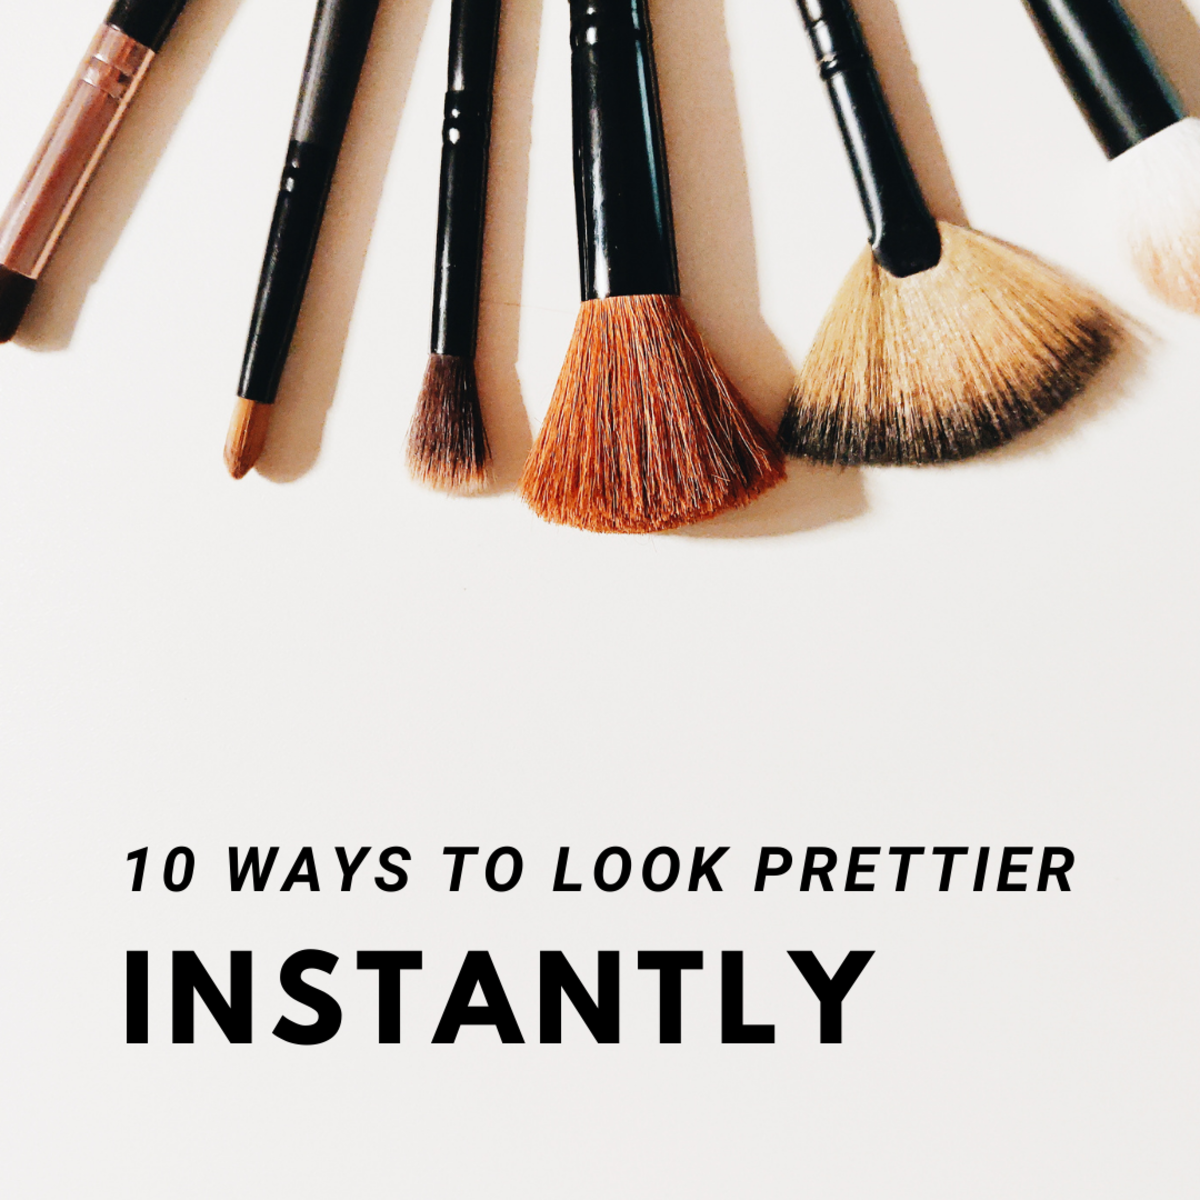 10 Ways to Look Prettier Instantly